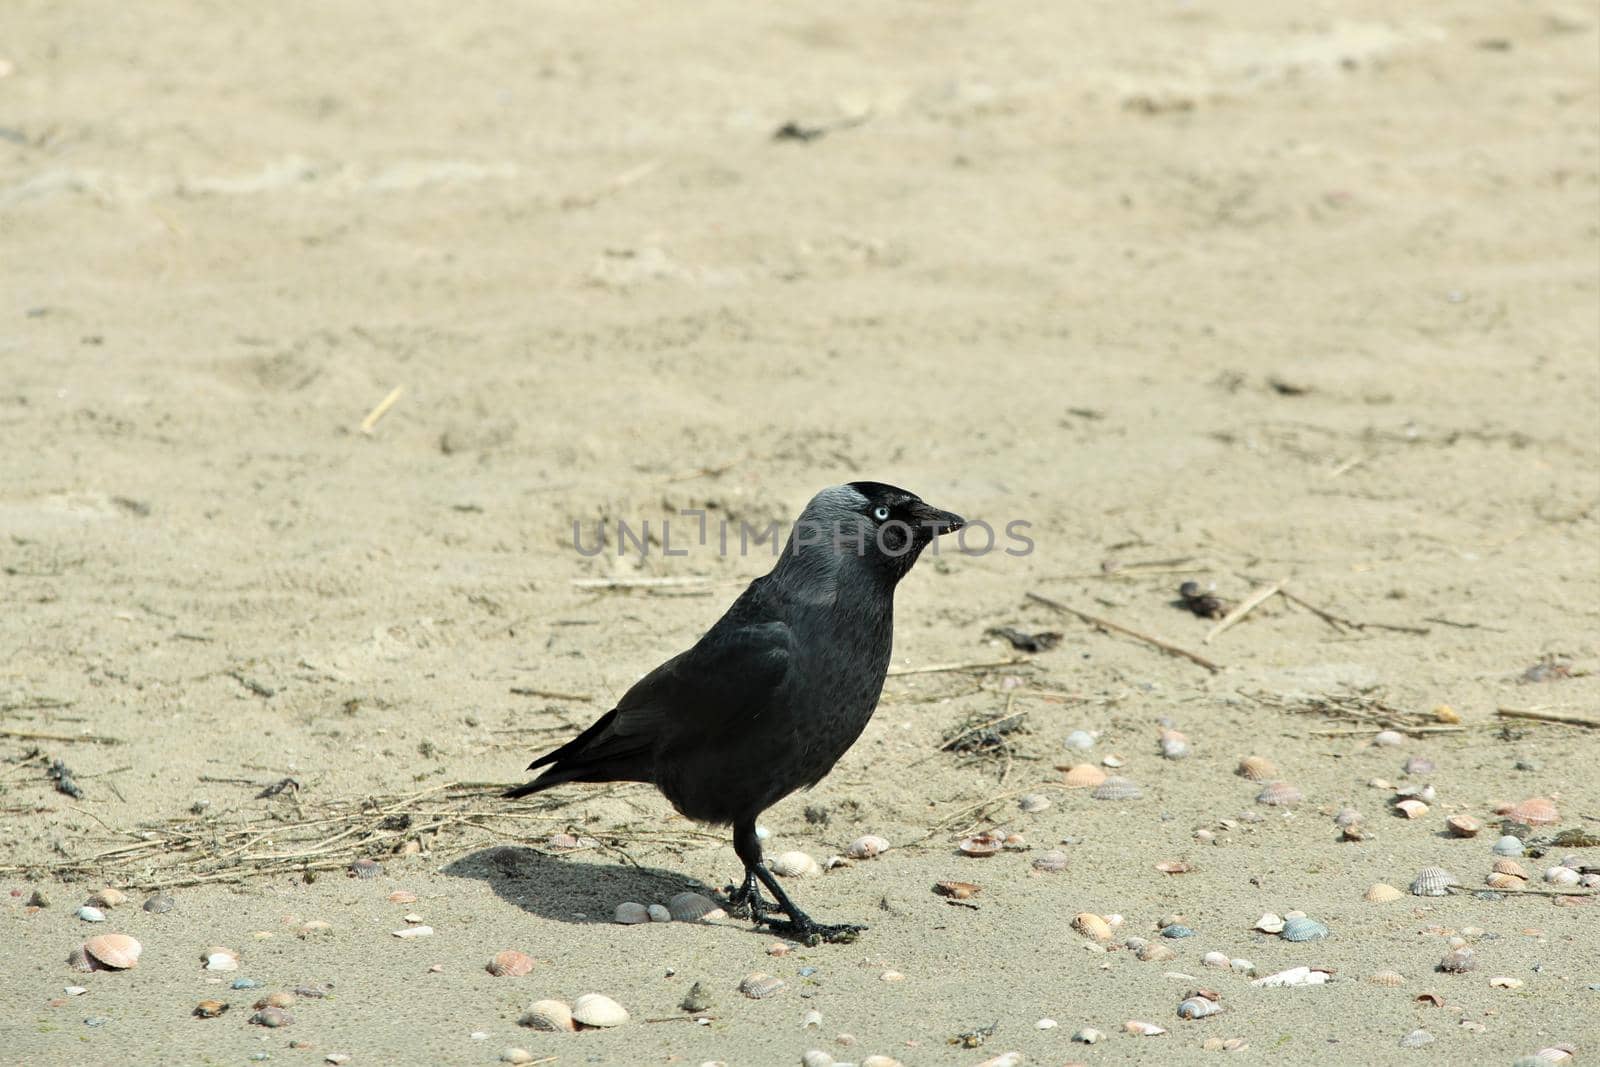 Black raven sitting on the sandy beach